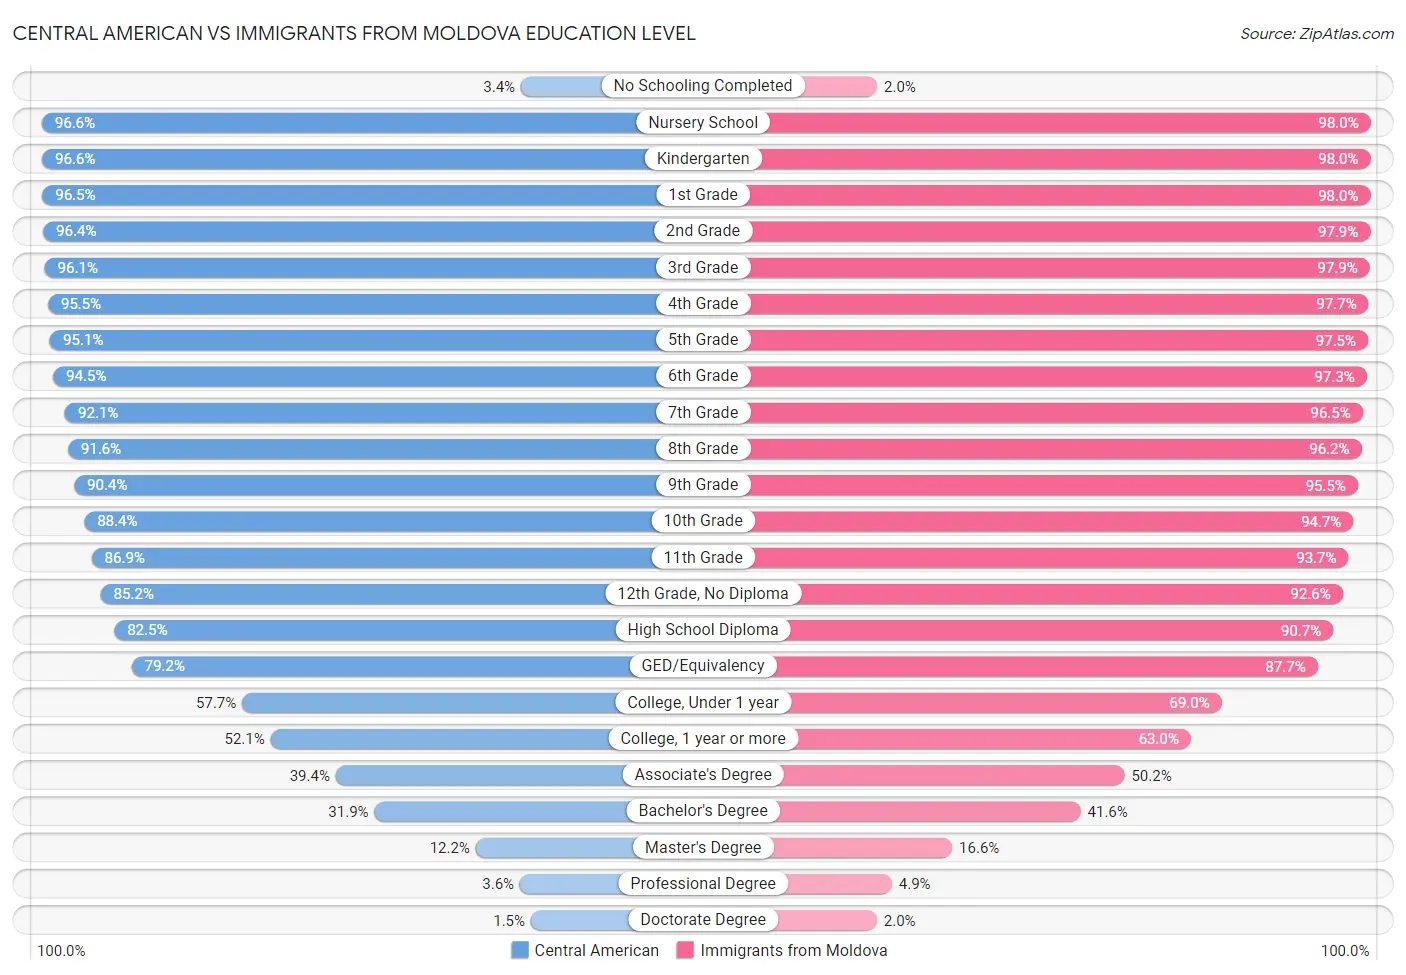 Central American vs Immigrants from Moldova Education Level